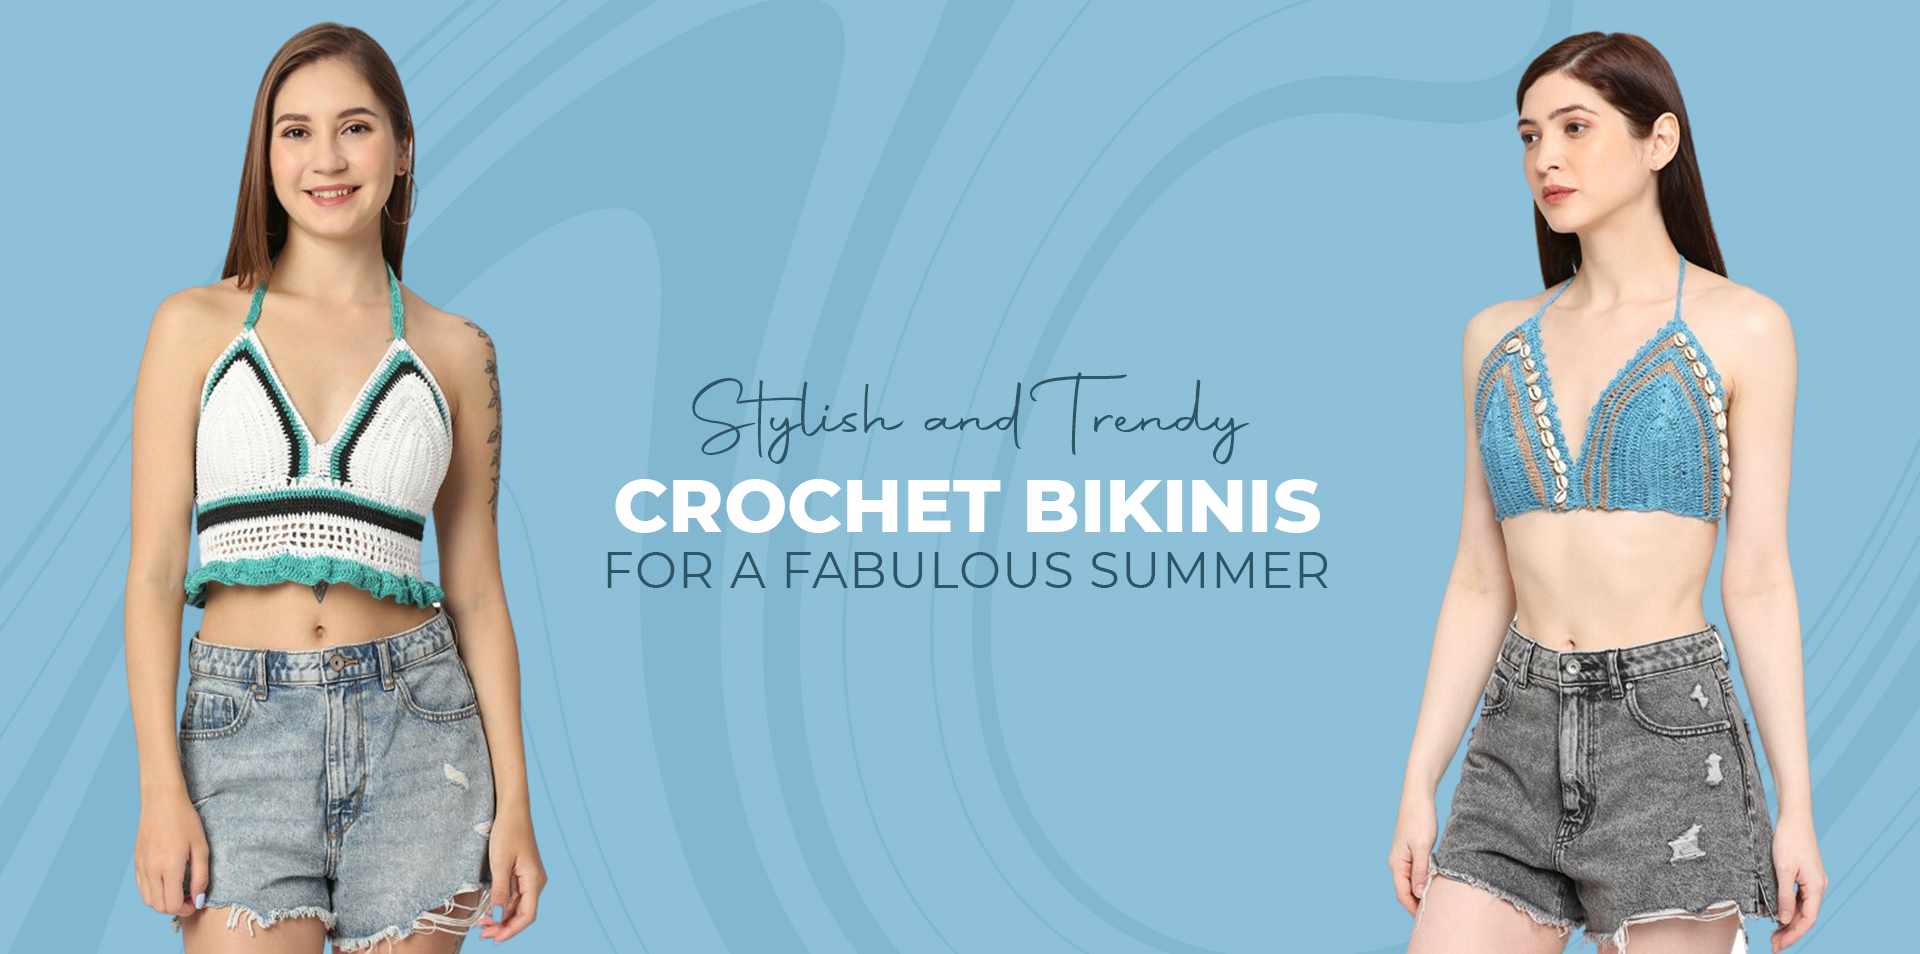 Stylish and Trendy Crochet Bikinis for a Fabulous Summer